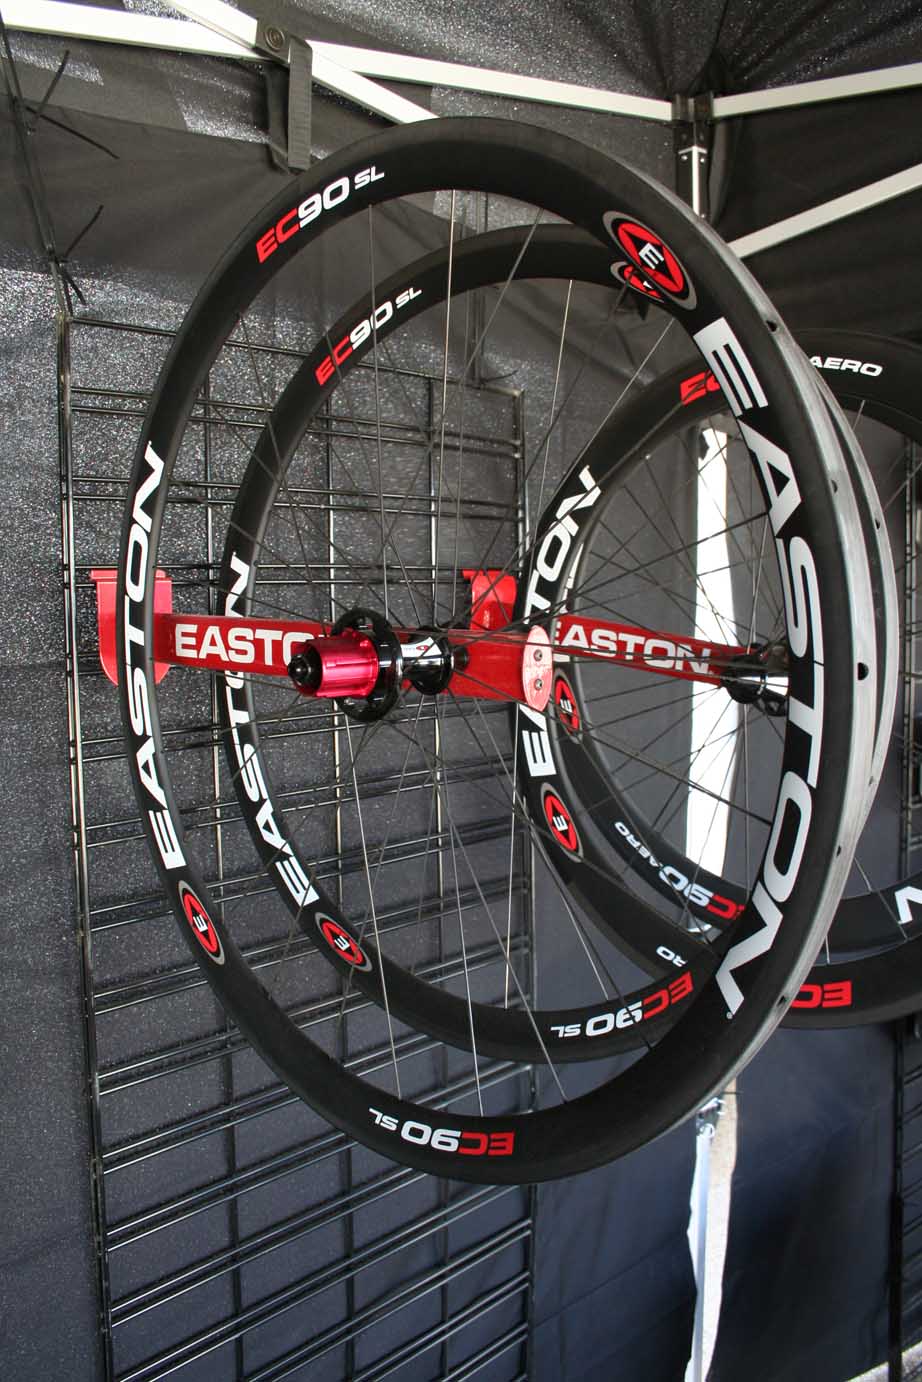 Easton EC90 SL 38 mm carbon tubular wheels.